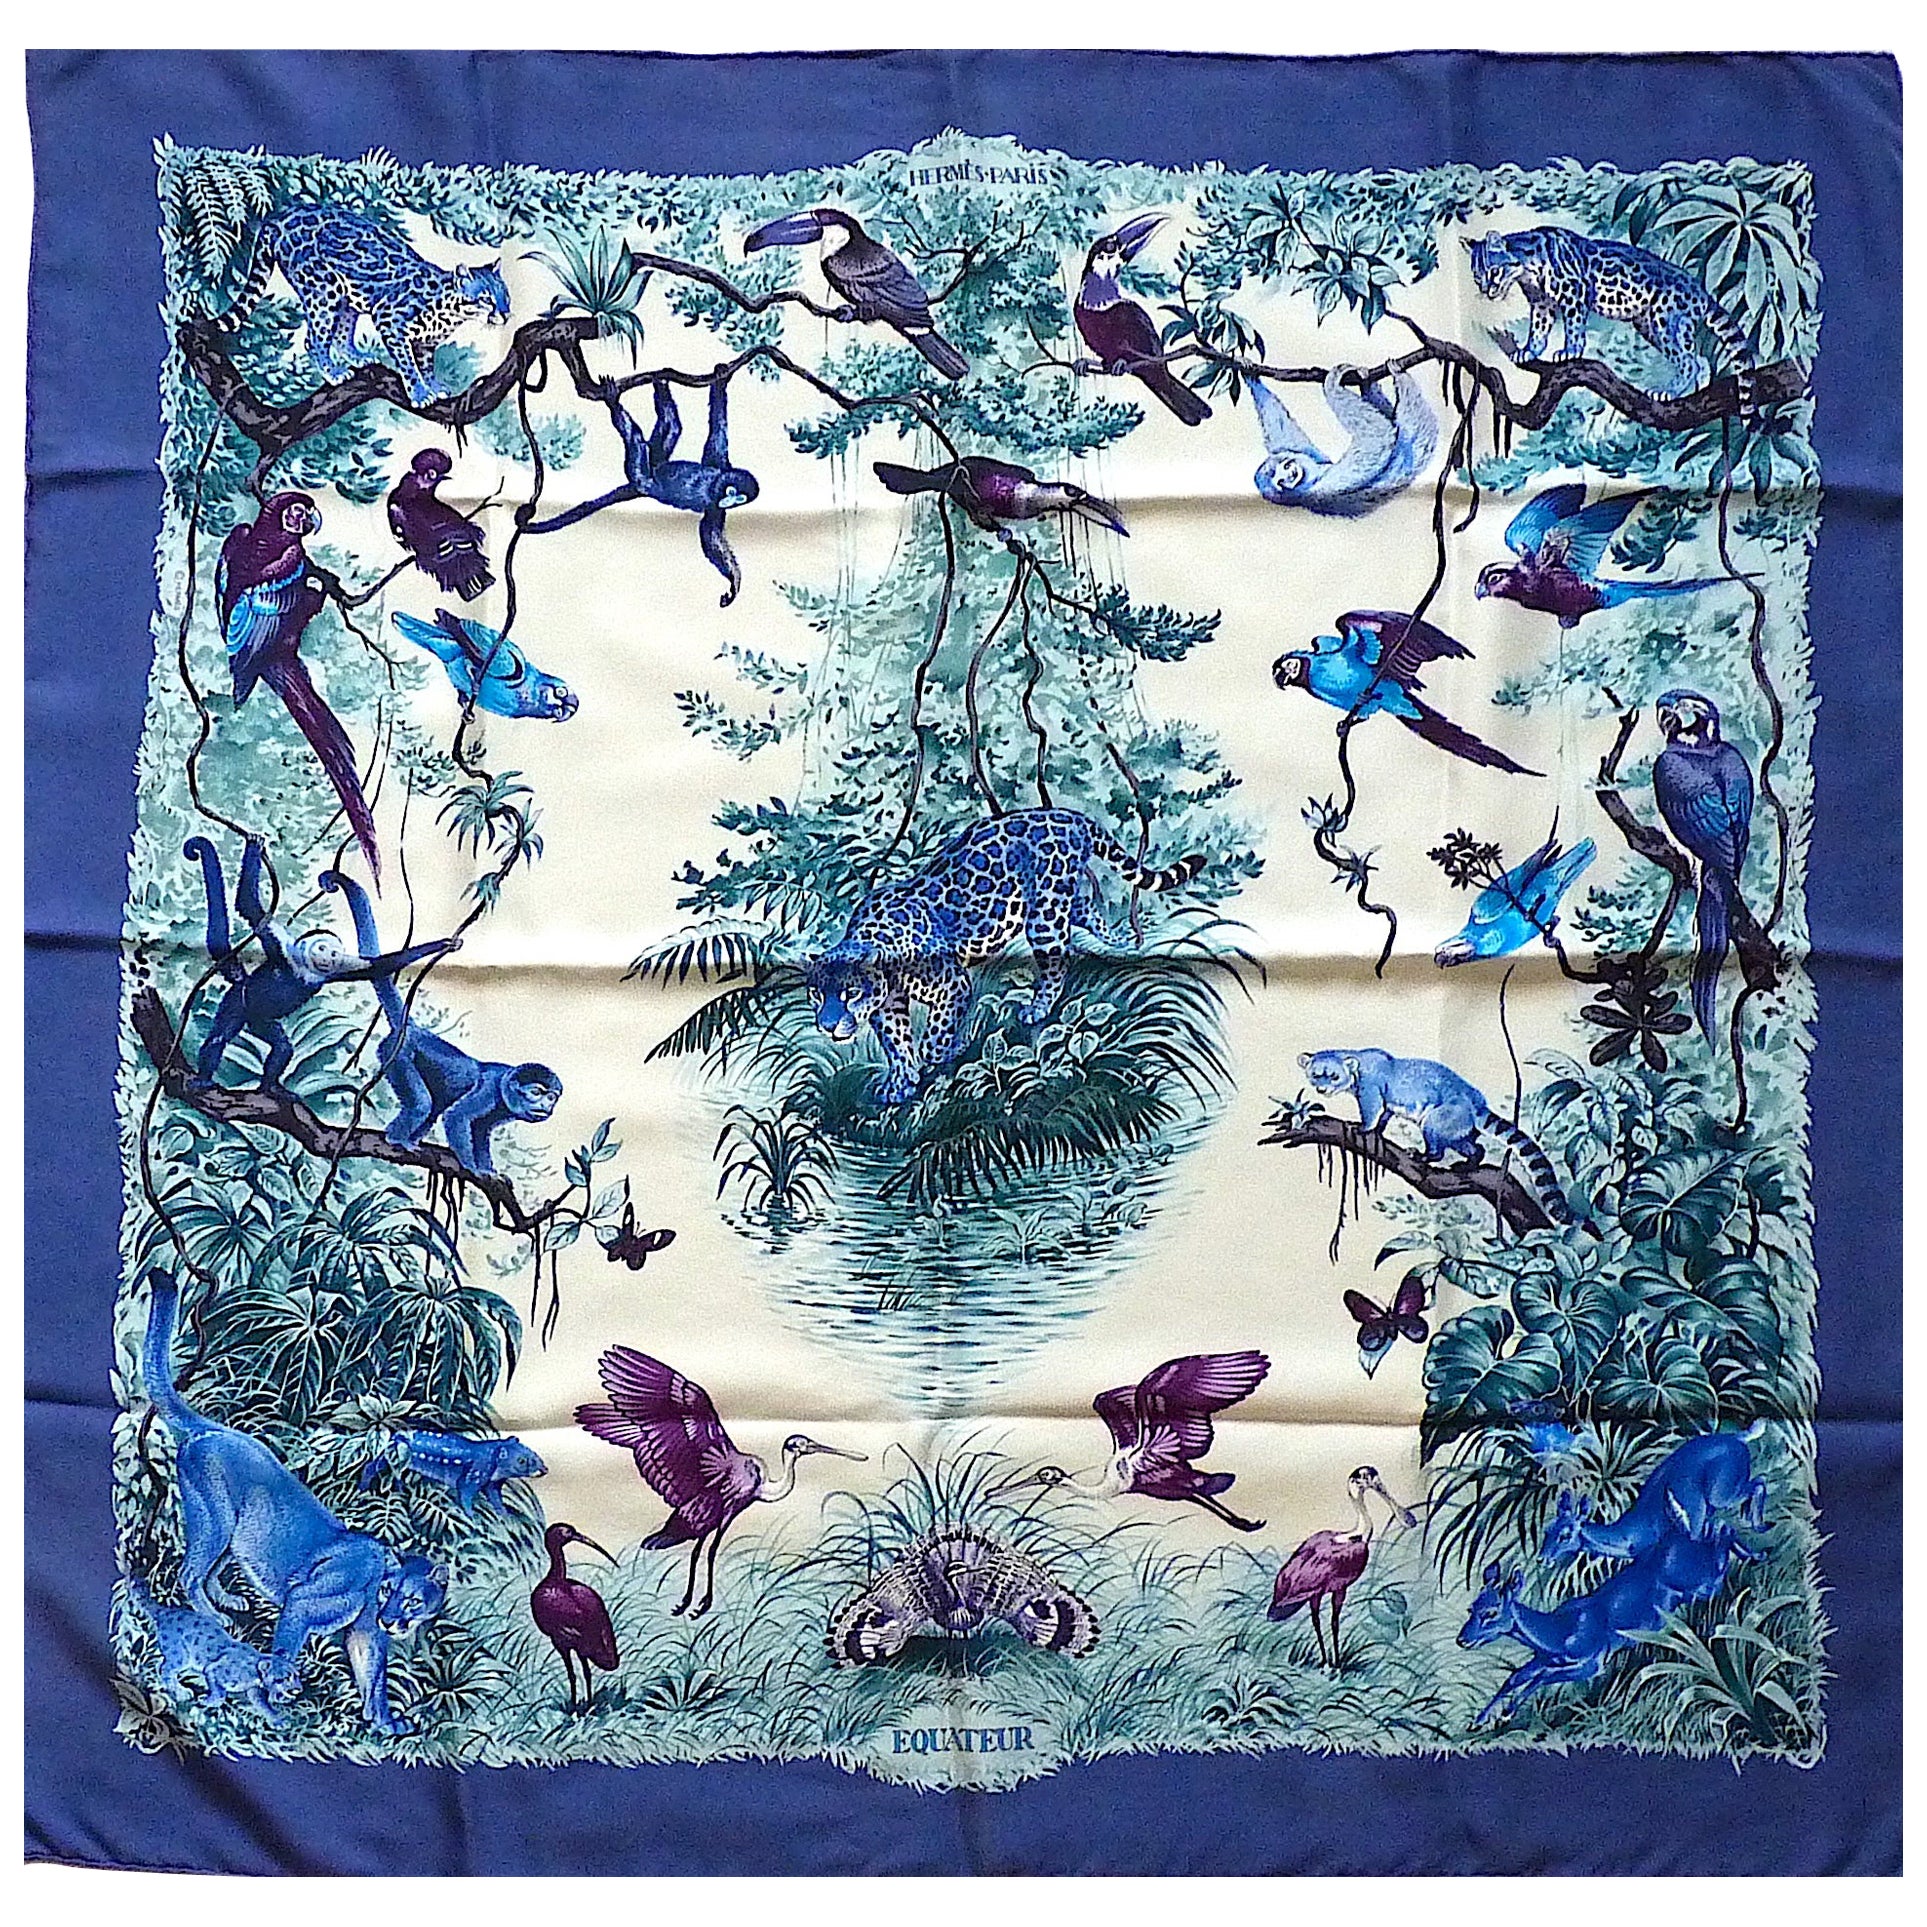 Hermes Scarf Equateur Wash Silk by Robert Dallet